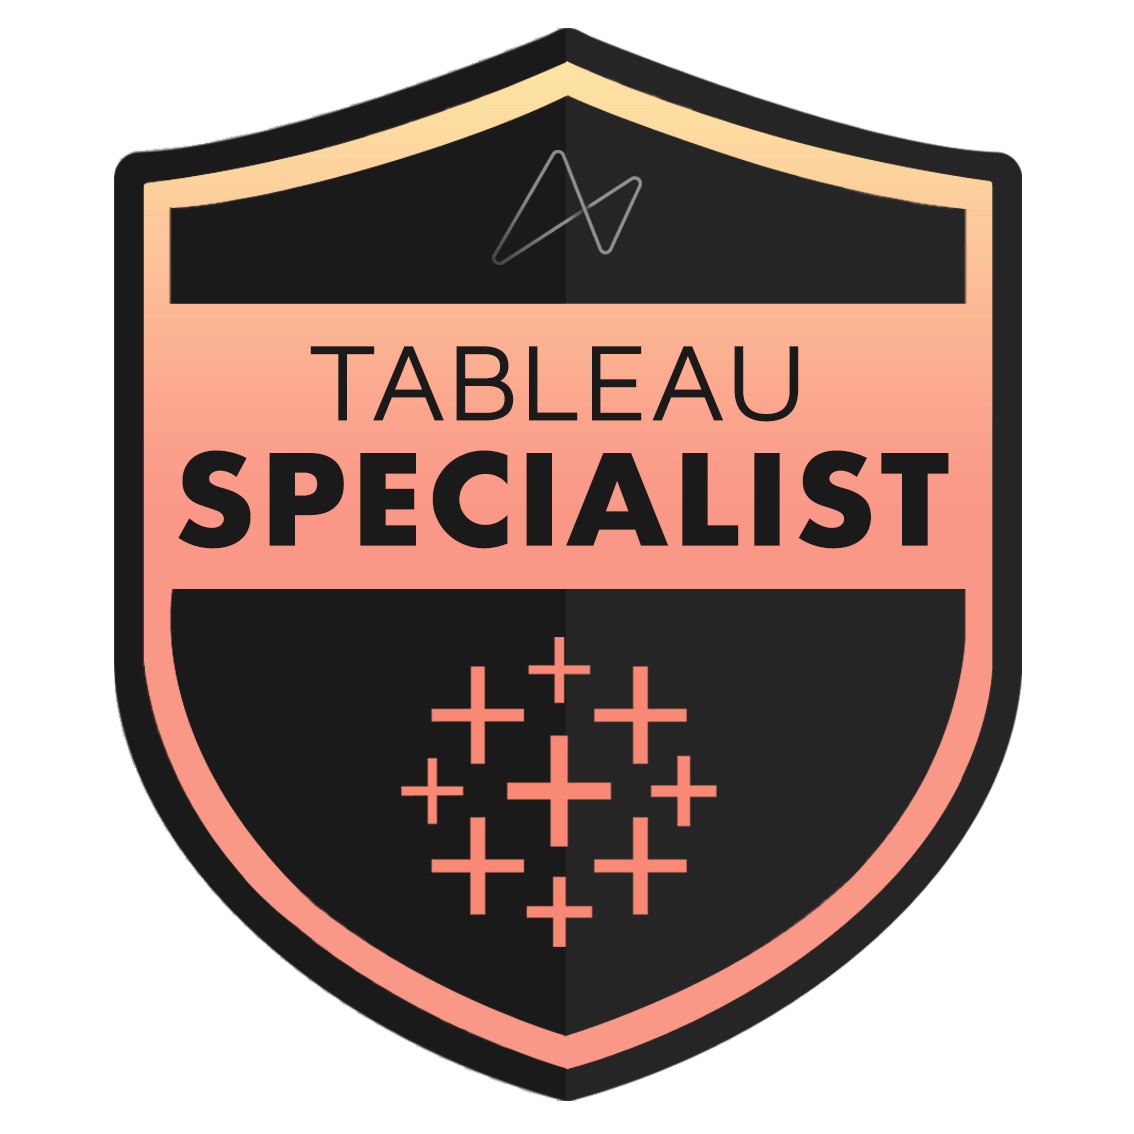 Tableau Specialist